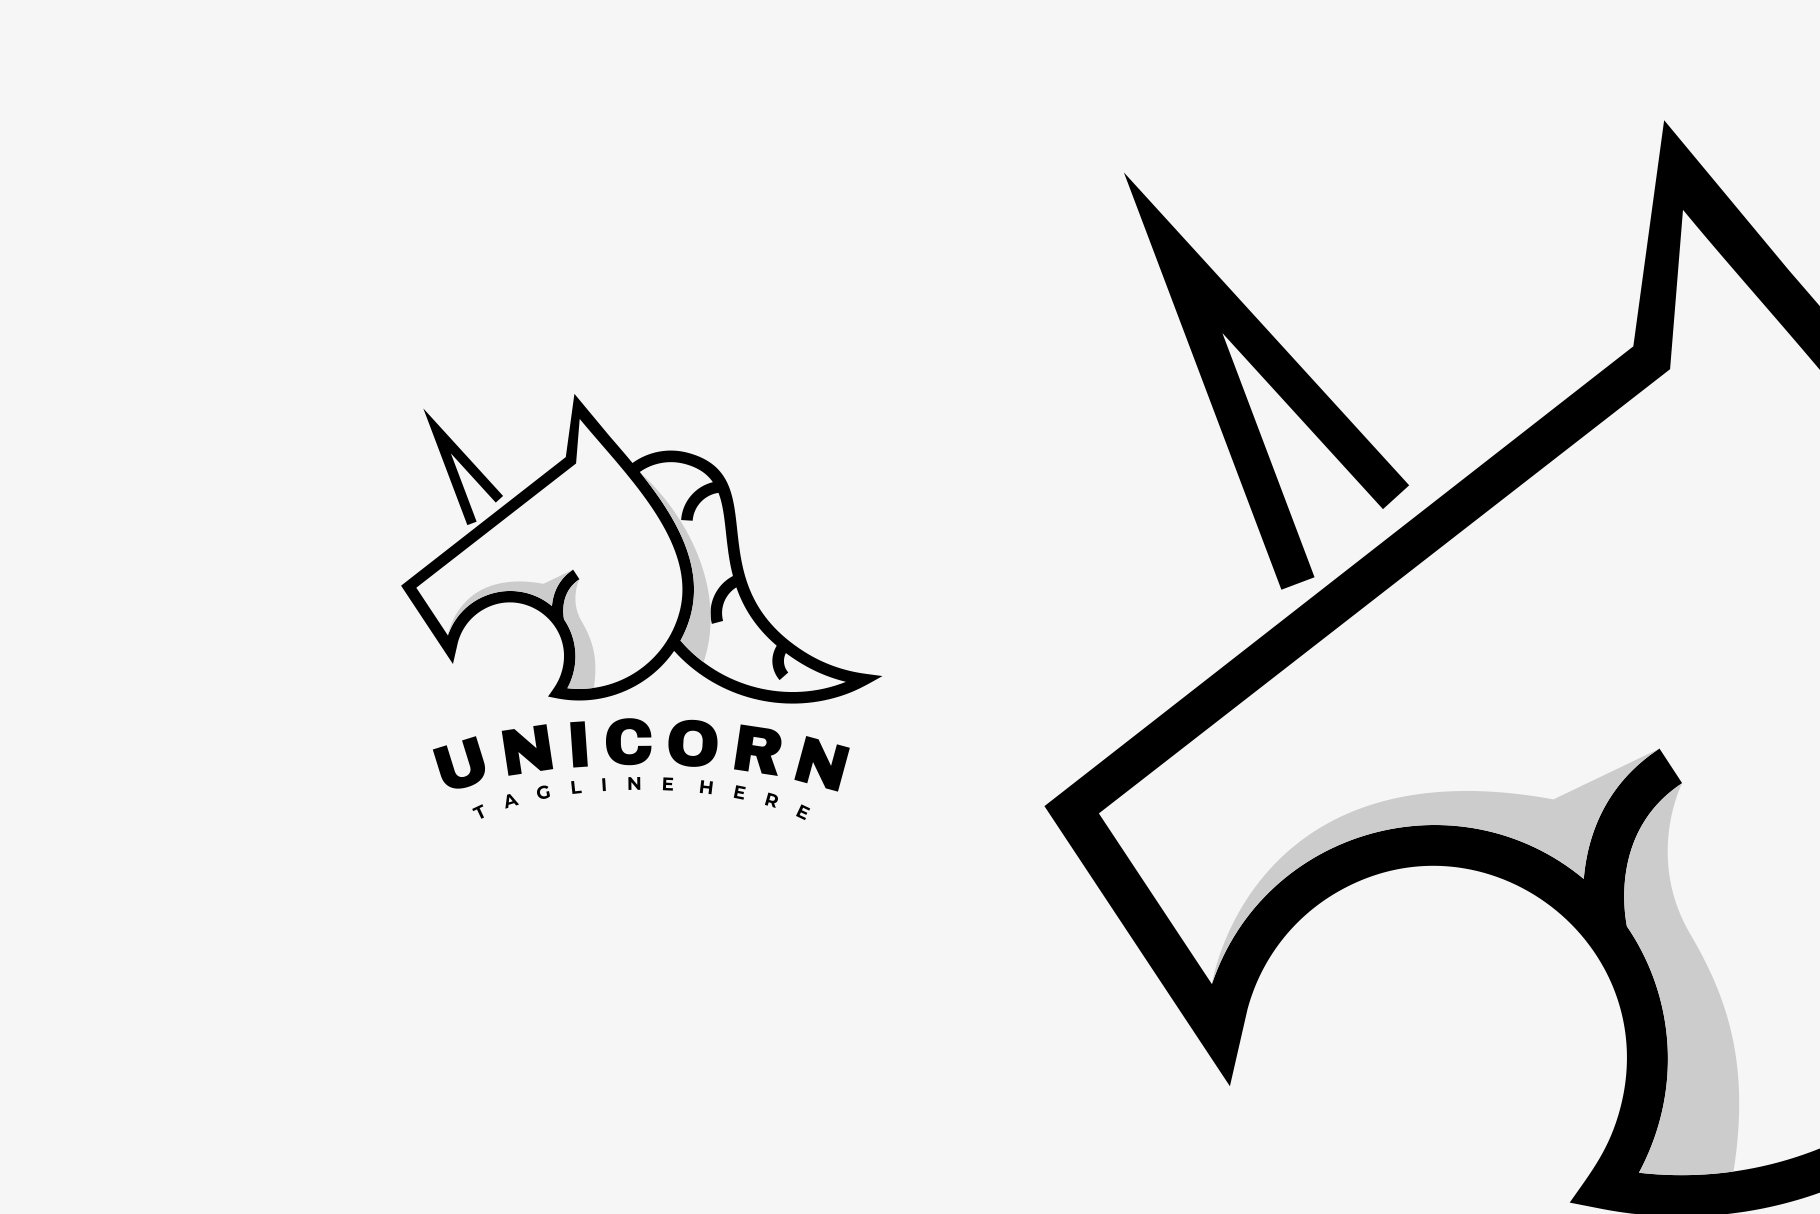 Unicorn Line Art Logo cover image.